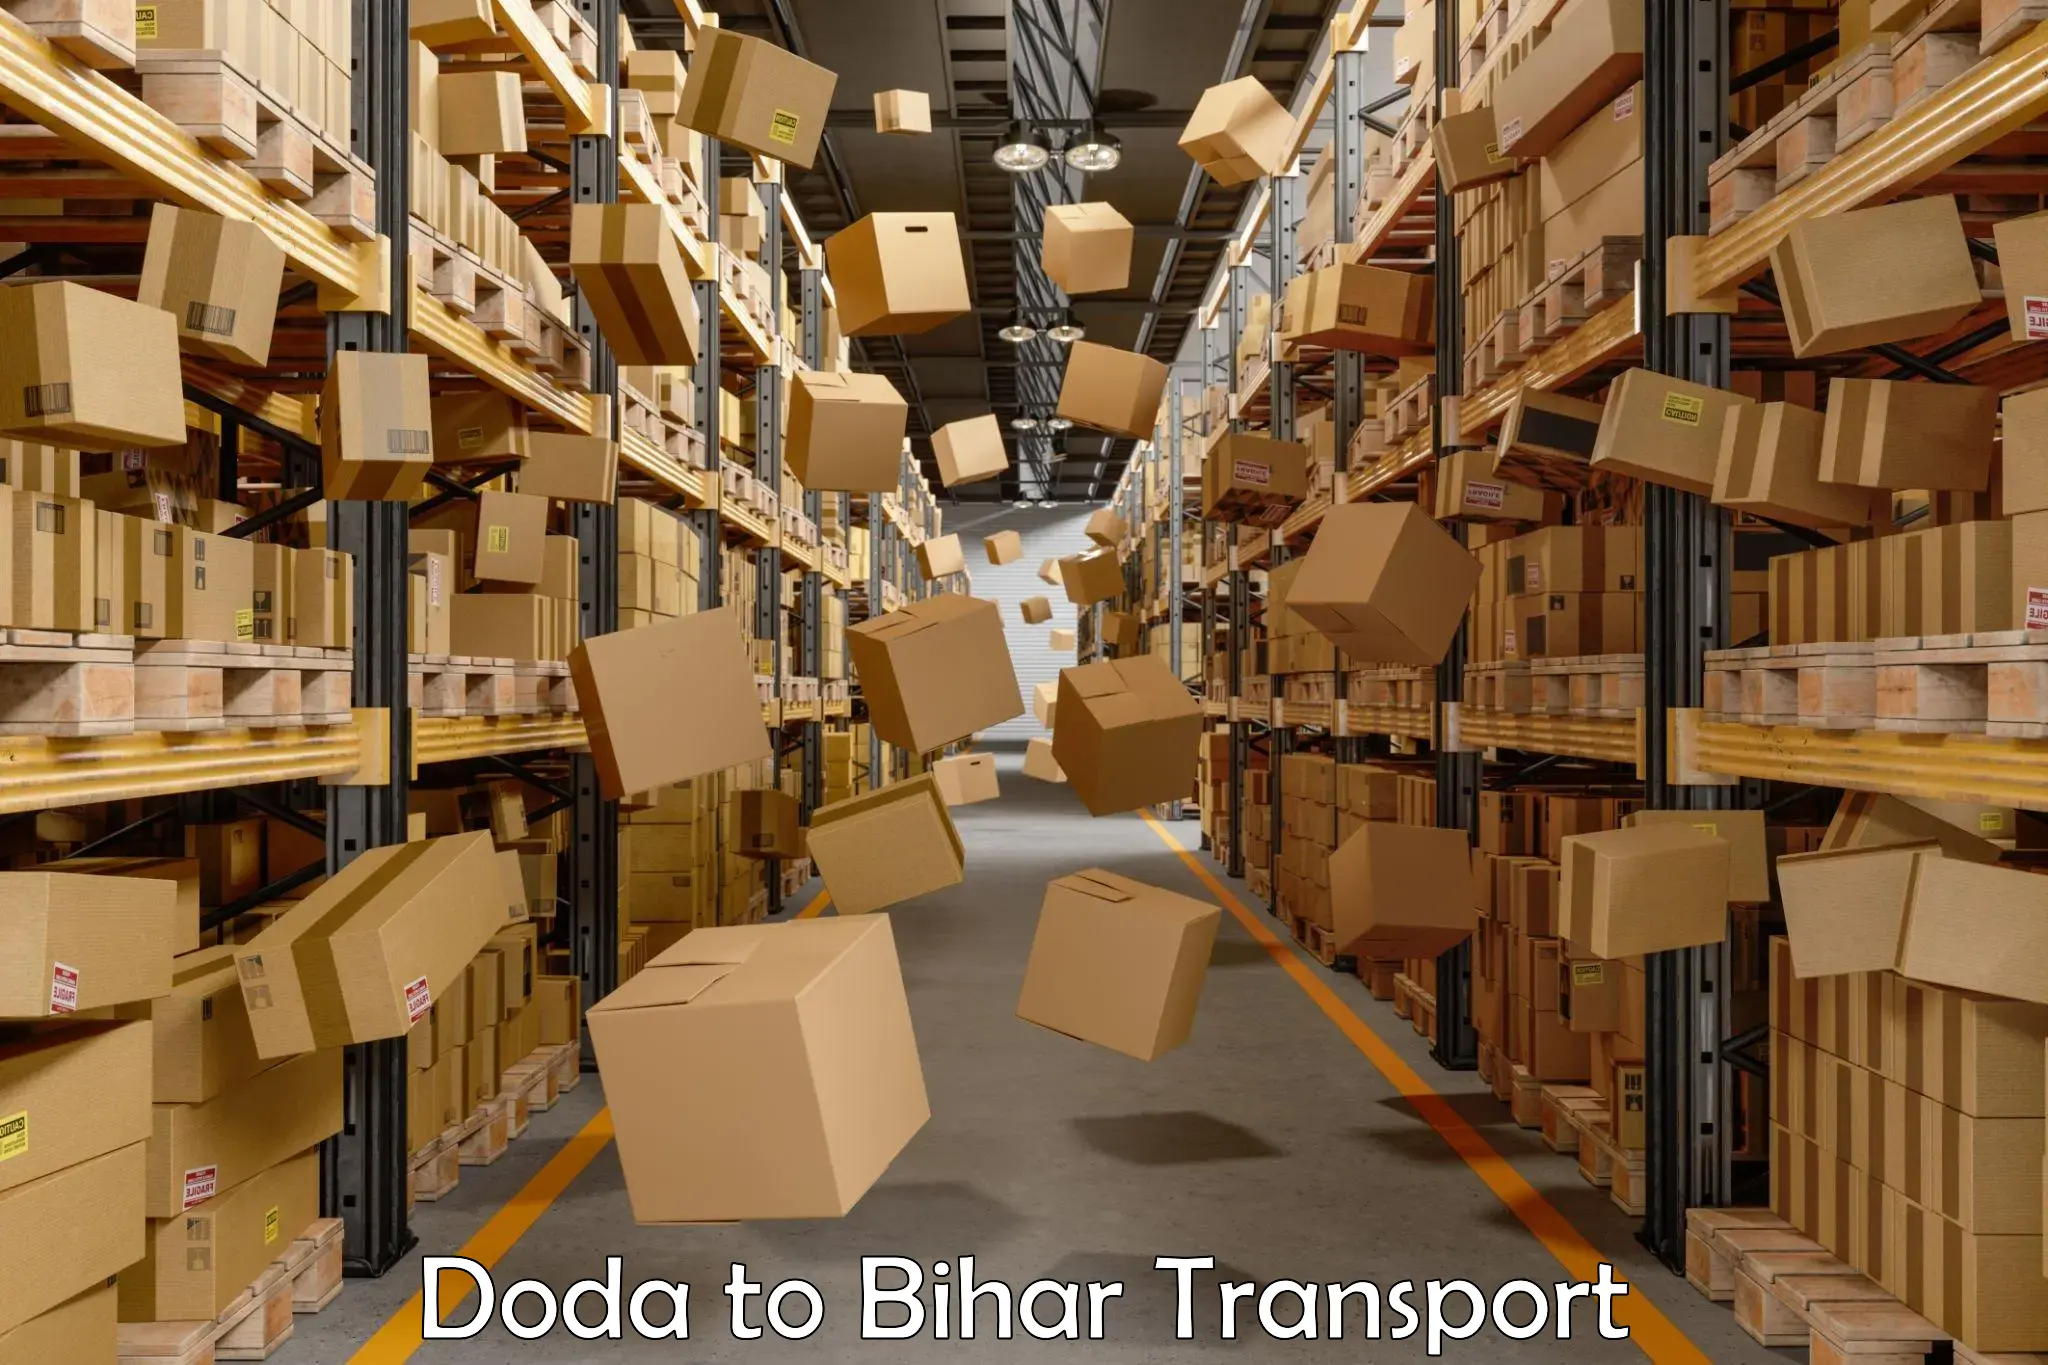 All India transport service Doda to Sandesh